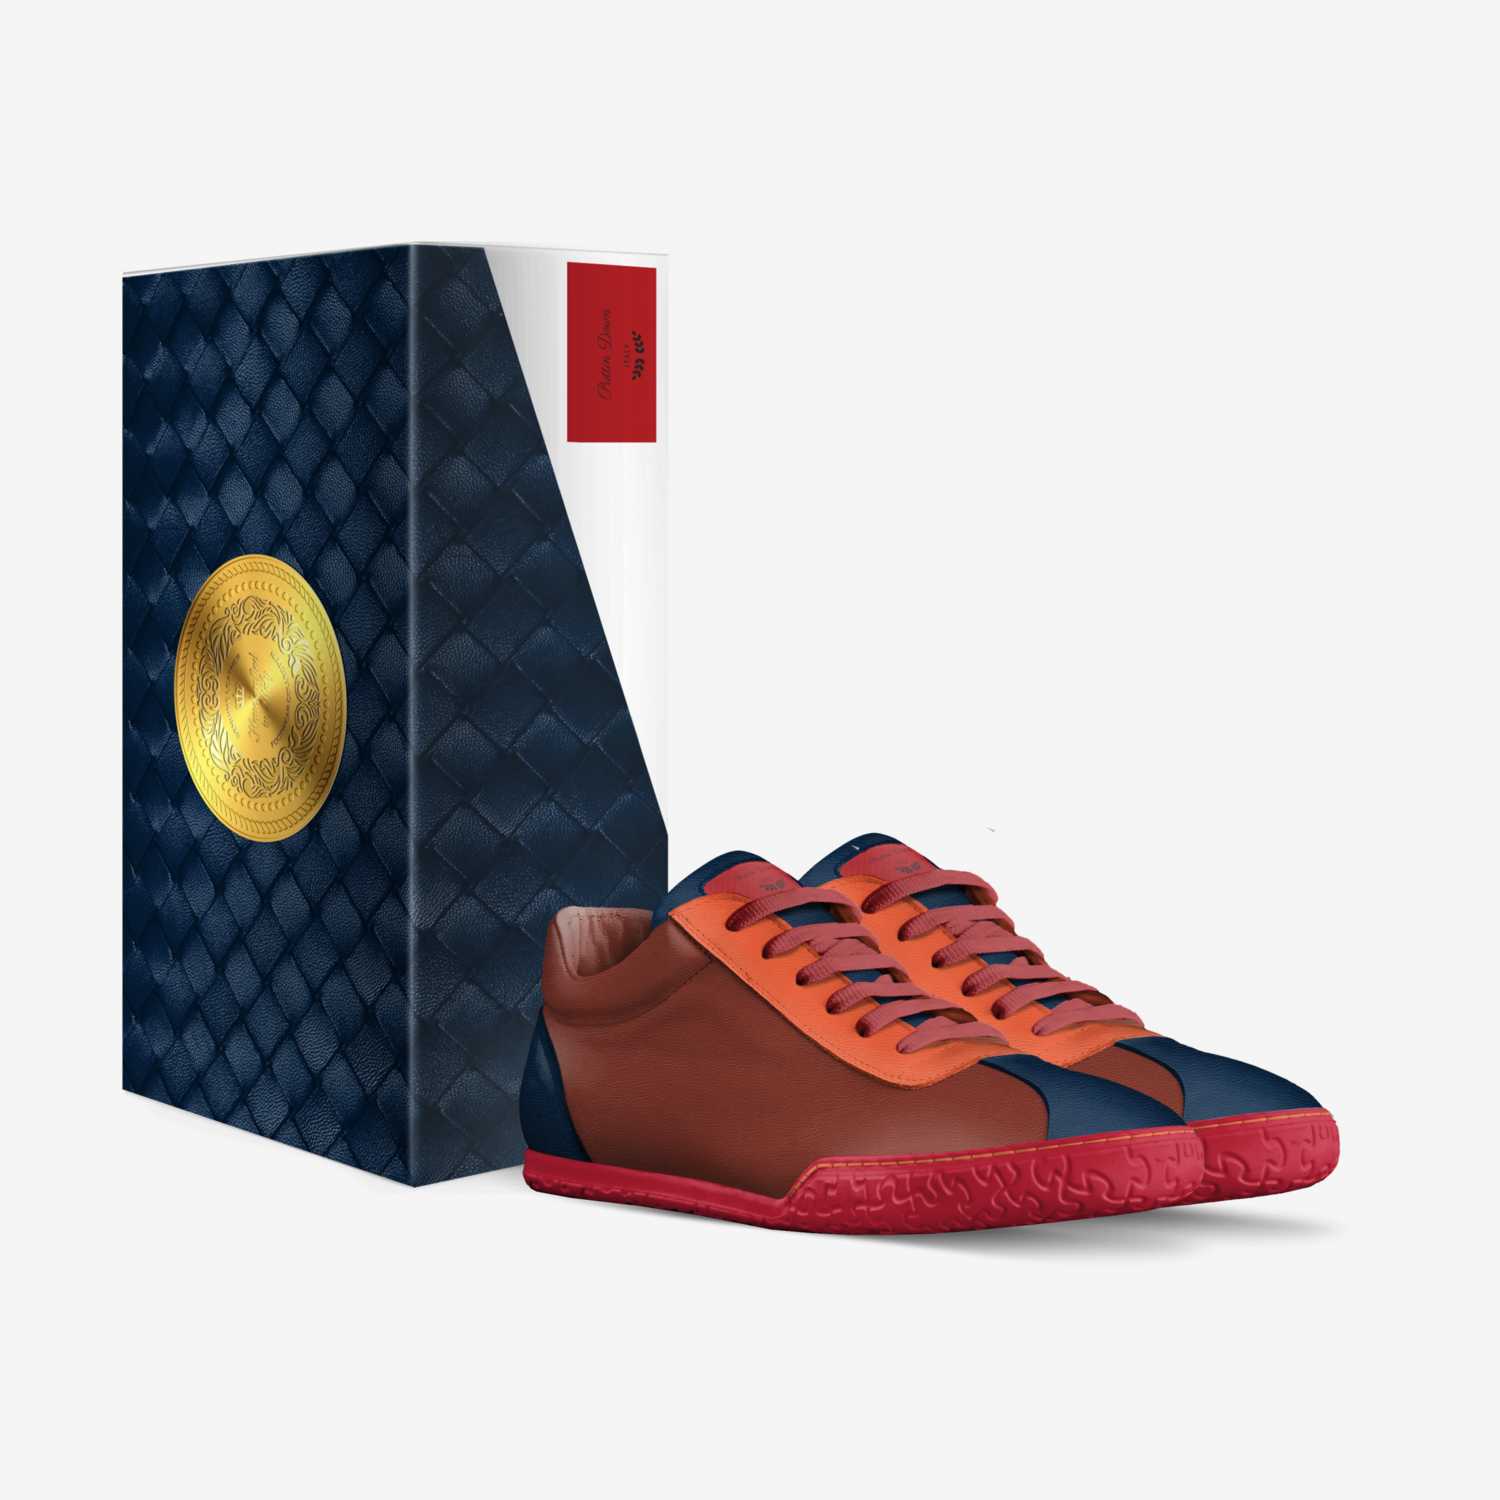 Io custom made in Italy shoes by Rashell Daniels | Box view